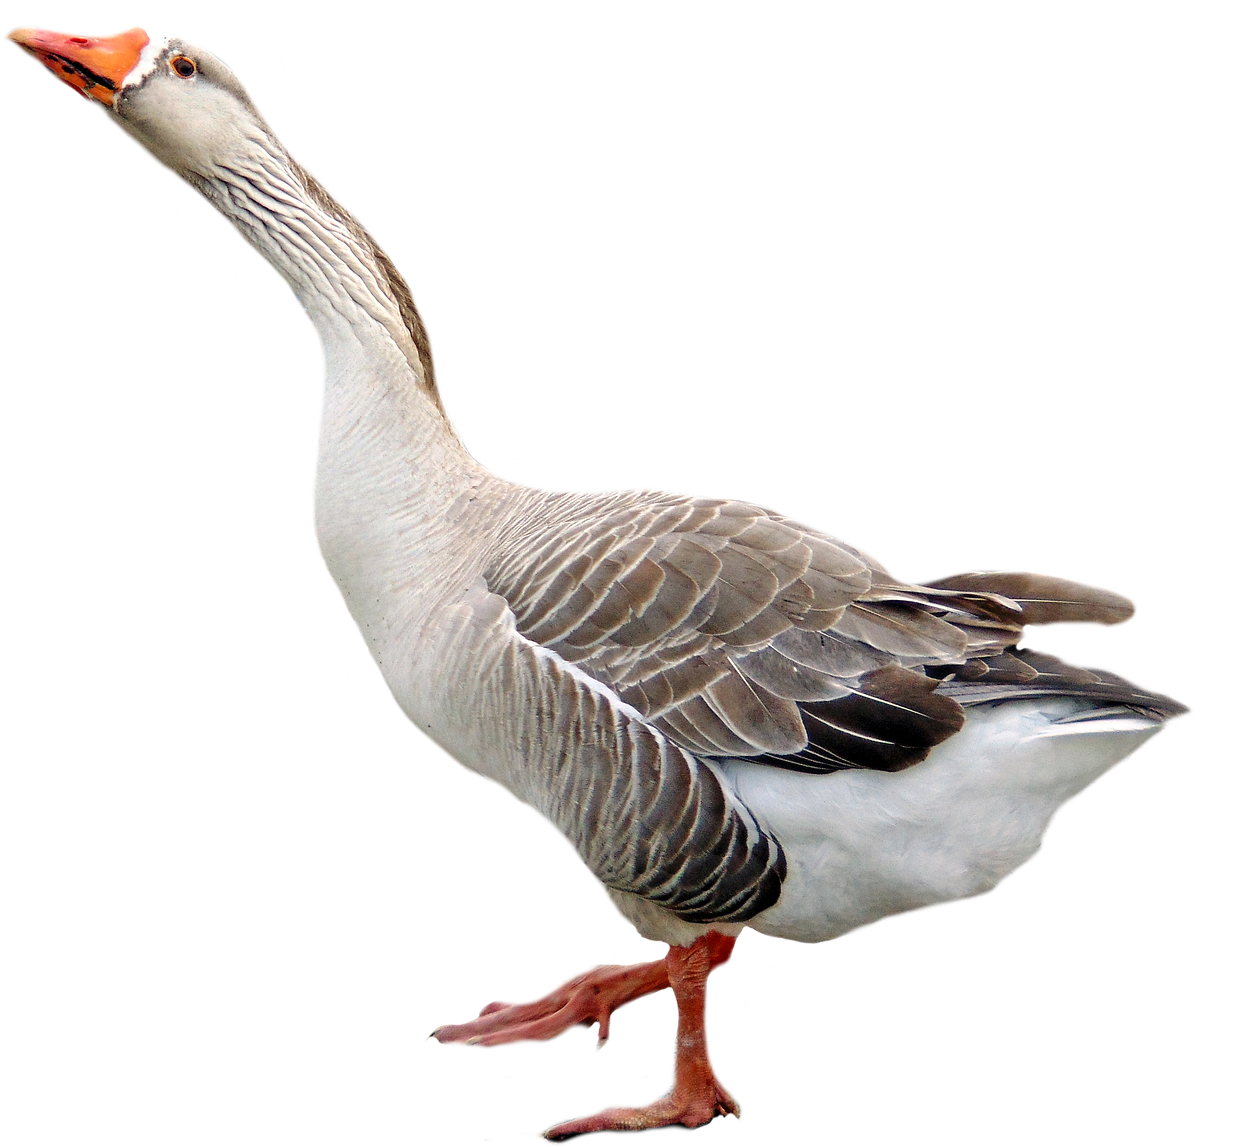 A White And Grey Goose With Orange Beak